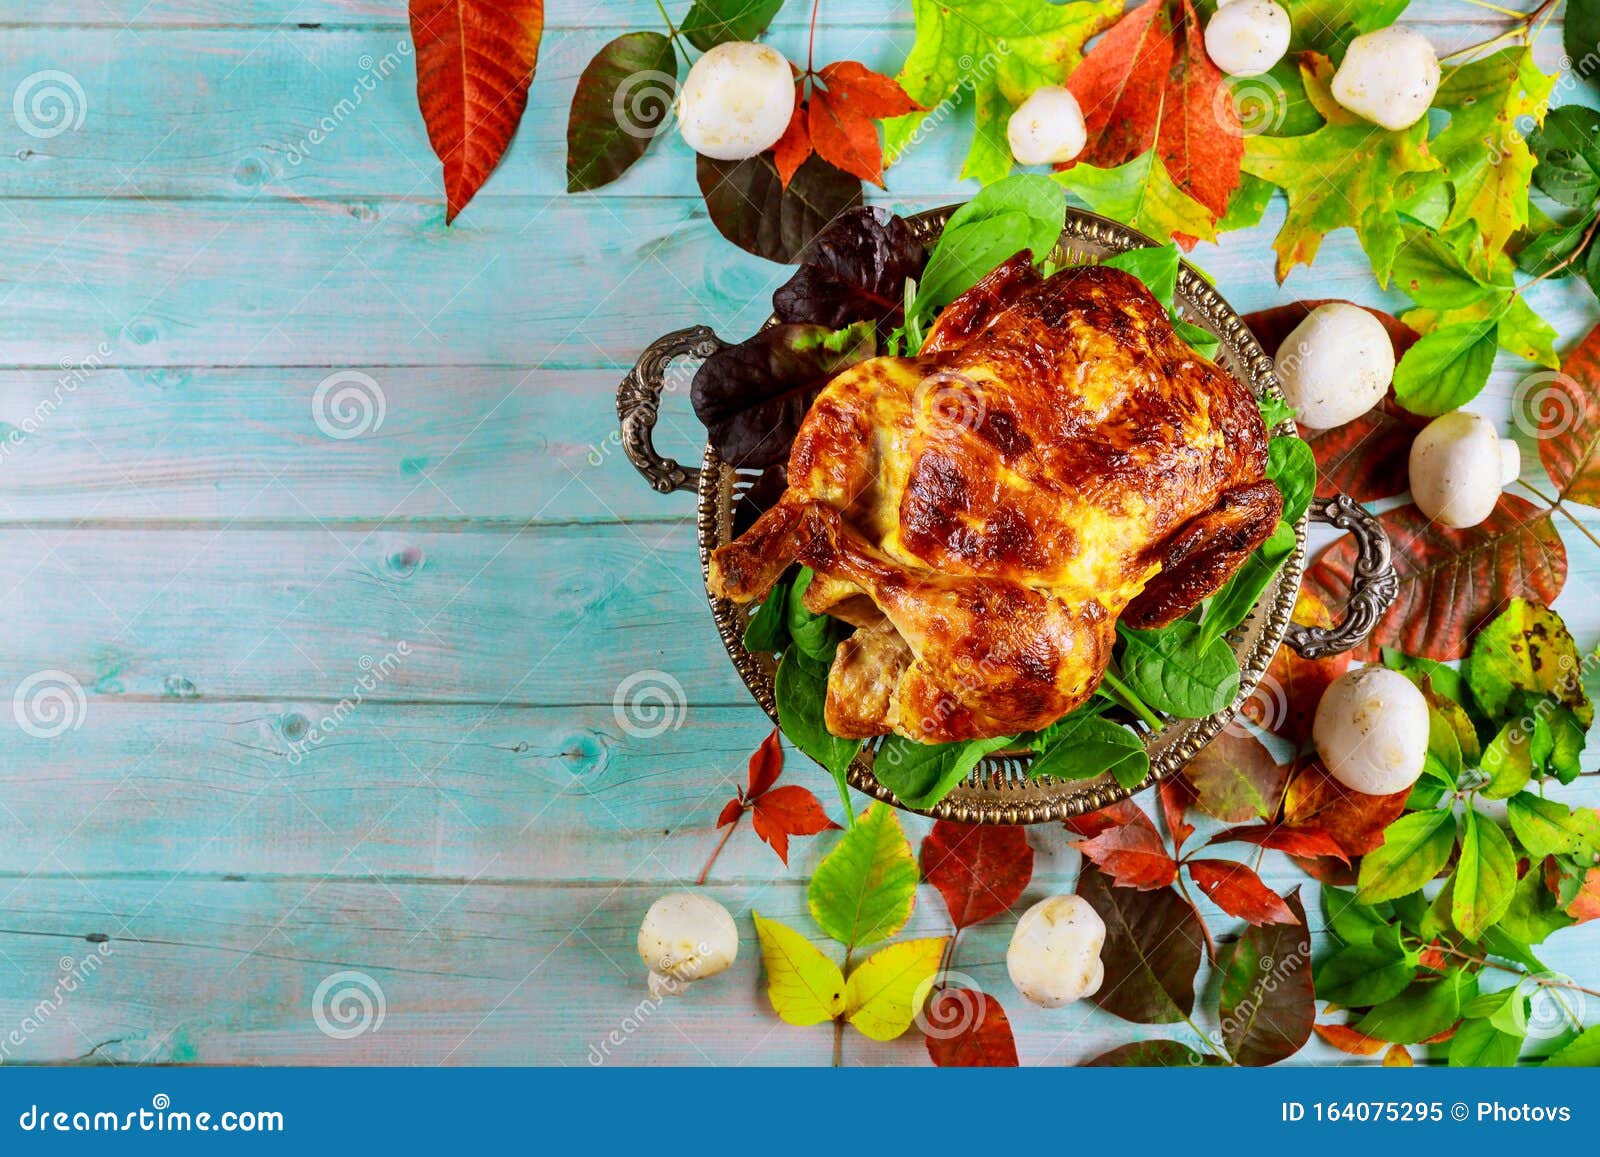 Thanksgiving Dinner with Turkey, Apple Pie, Pumpkin Stock Image - Image ...